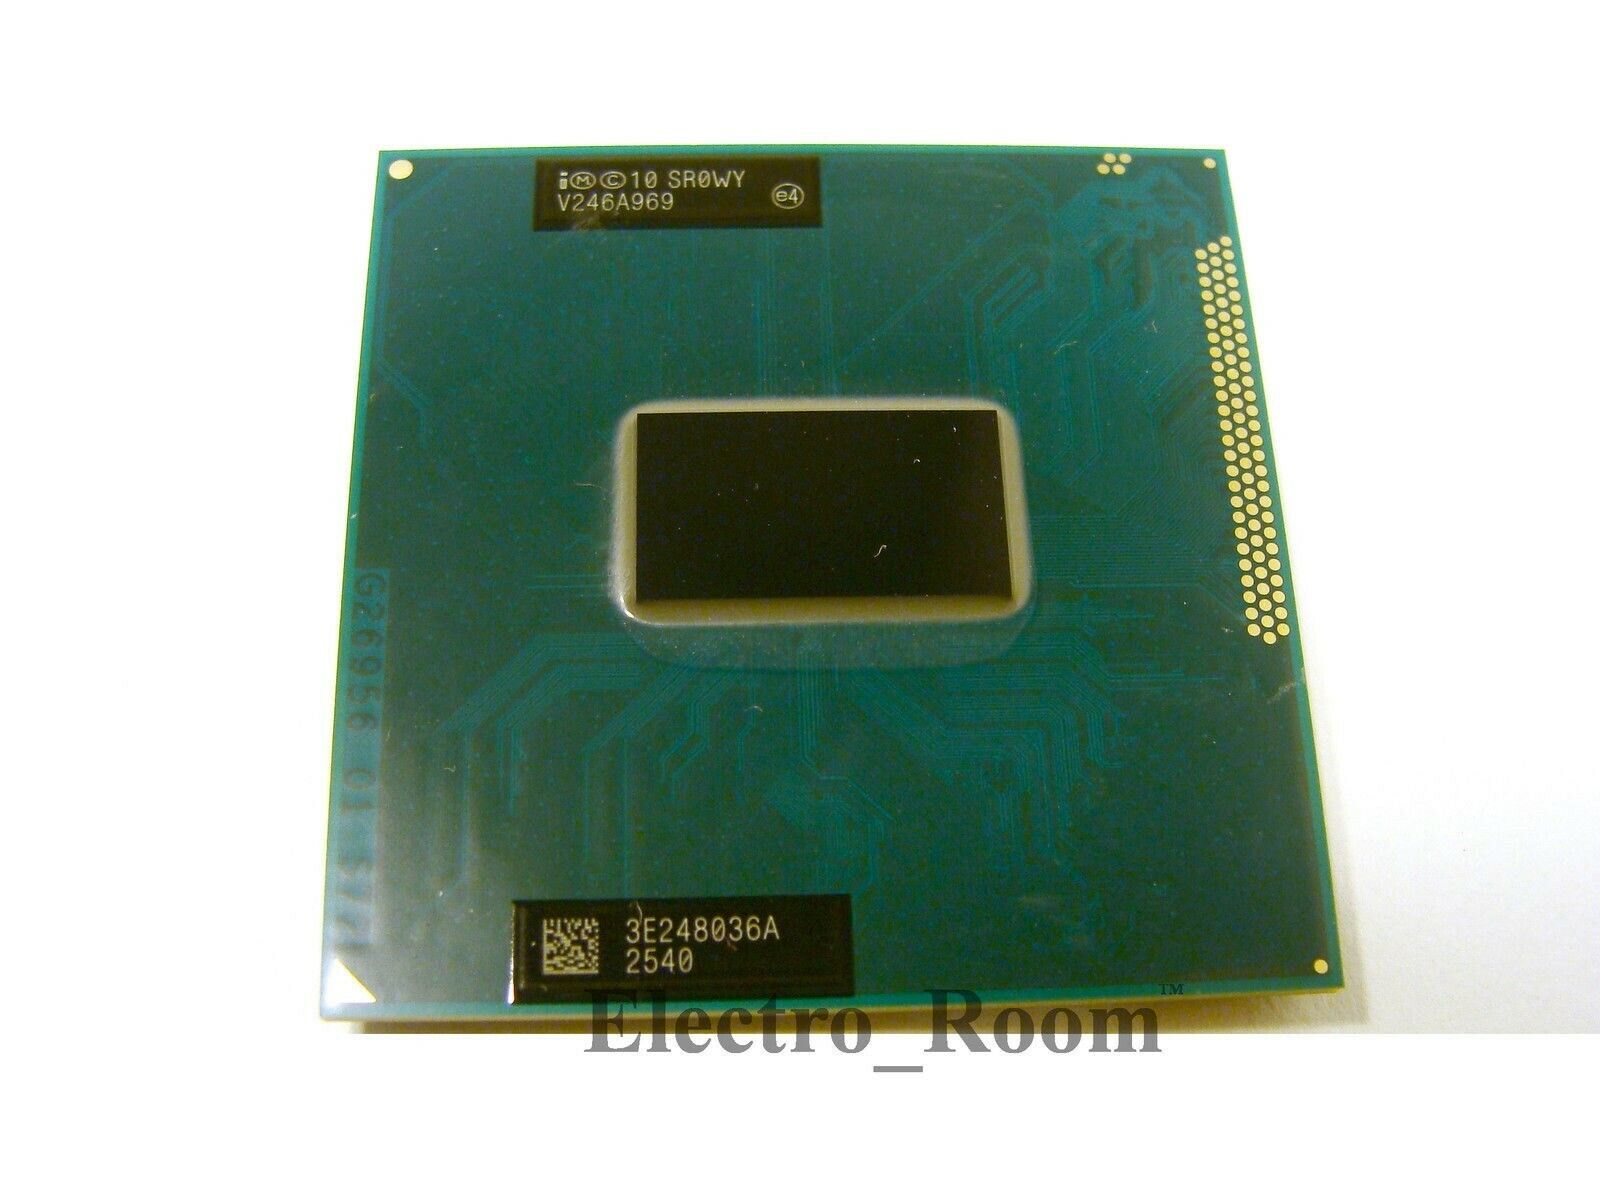 Intel Core i5 Mobile i5-3230M 2.6GHz 3MB Socket G2 Laptop Processor CPU SR0WY